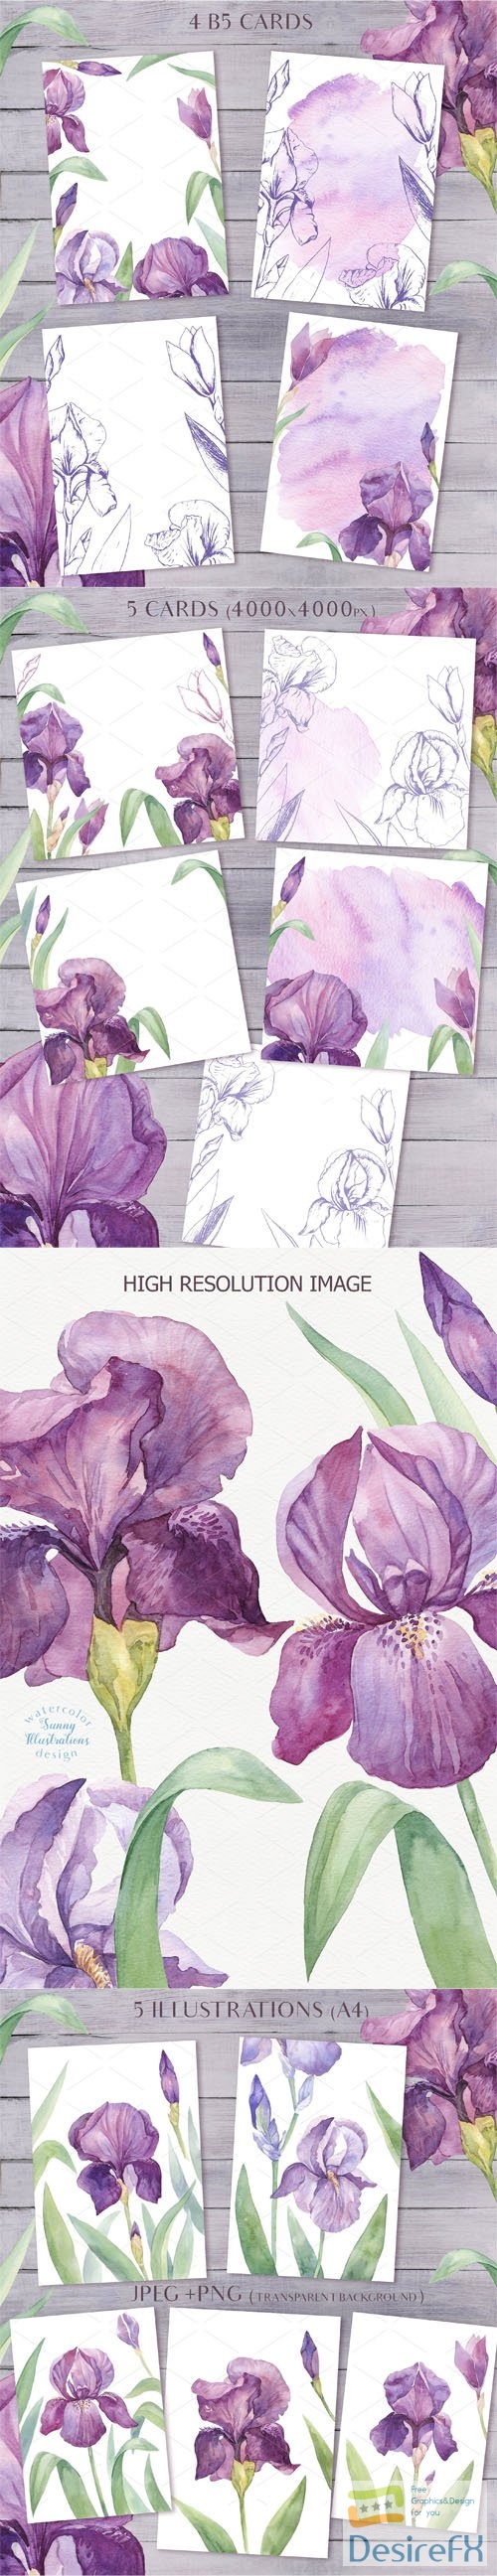 Violet Blossom - Watercolor Vector Graphic Set